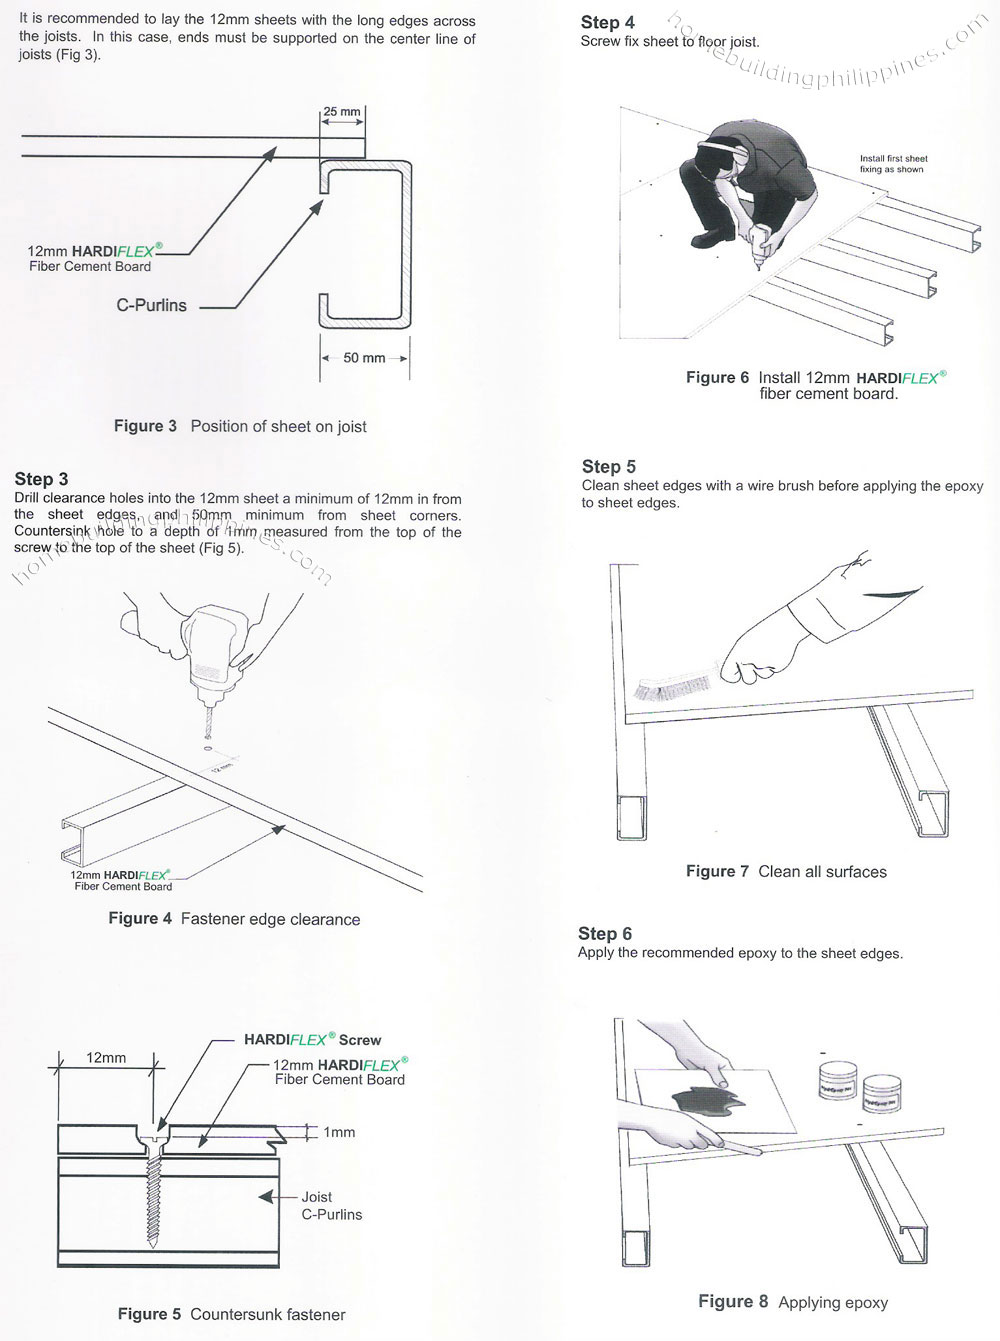 HardieFlex Flooring System Durable Fiber Cement Board Installation Manual